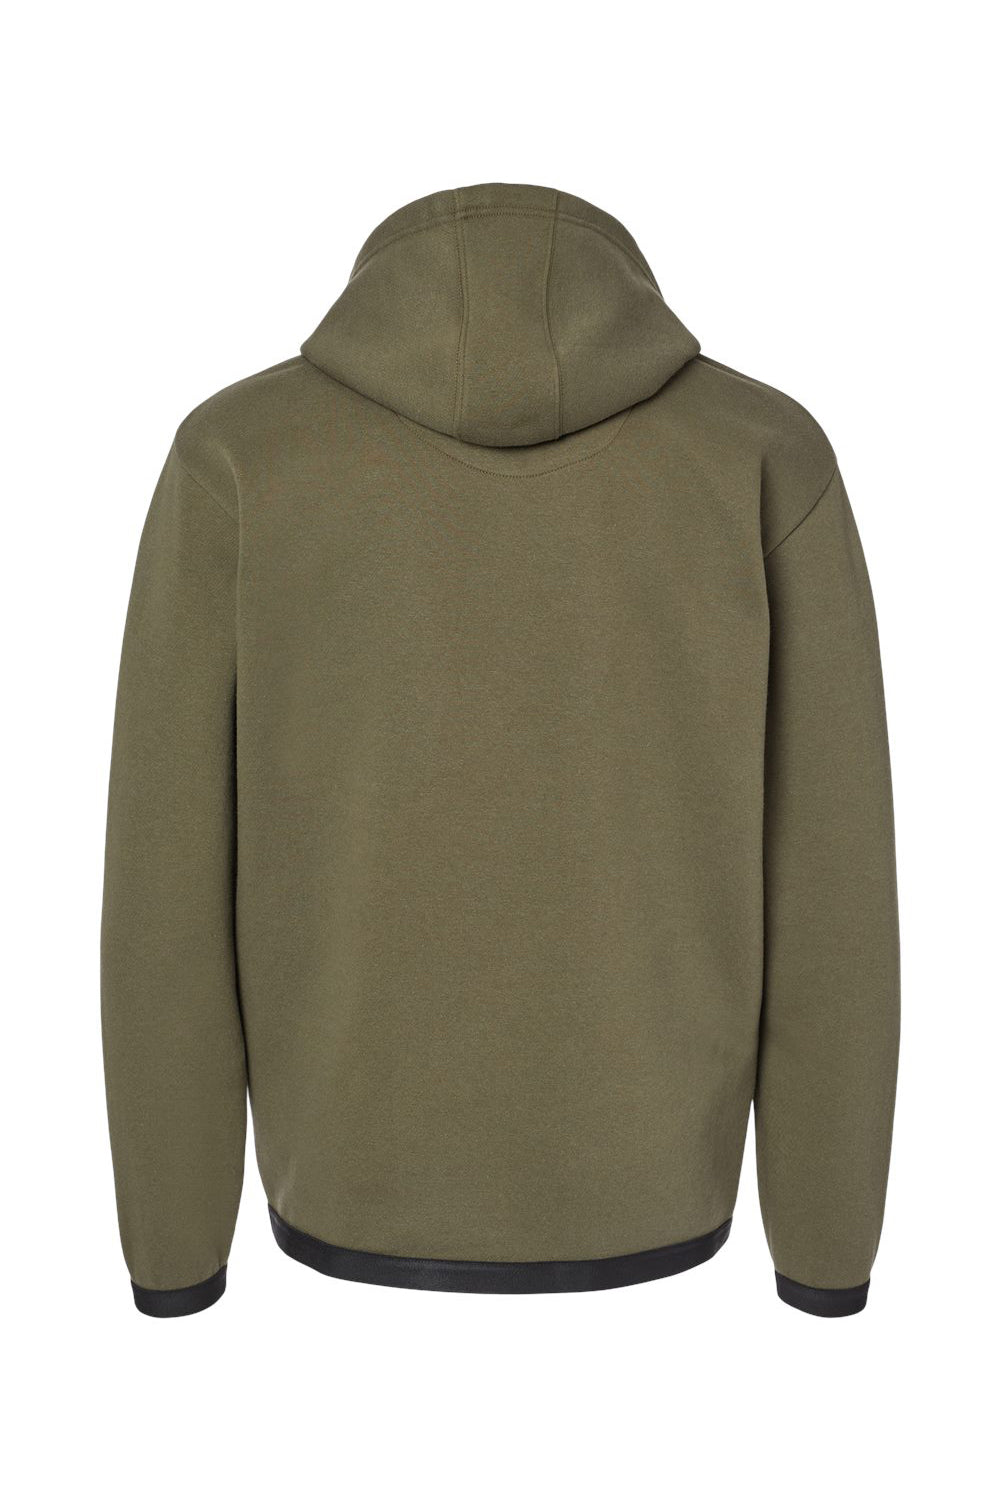 LAT 6996 Mens The Statement Fleece Hooded Sweatshirt Hoodie Military Green/Black Flat Back